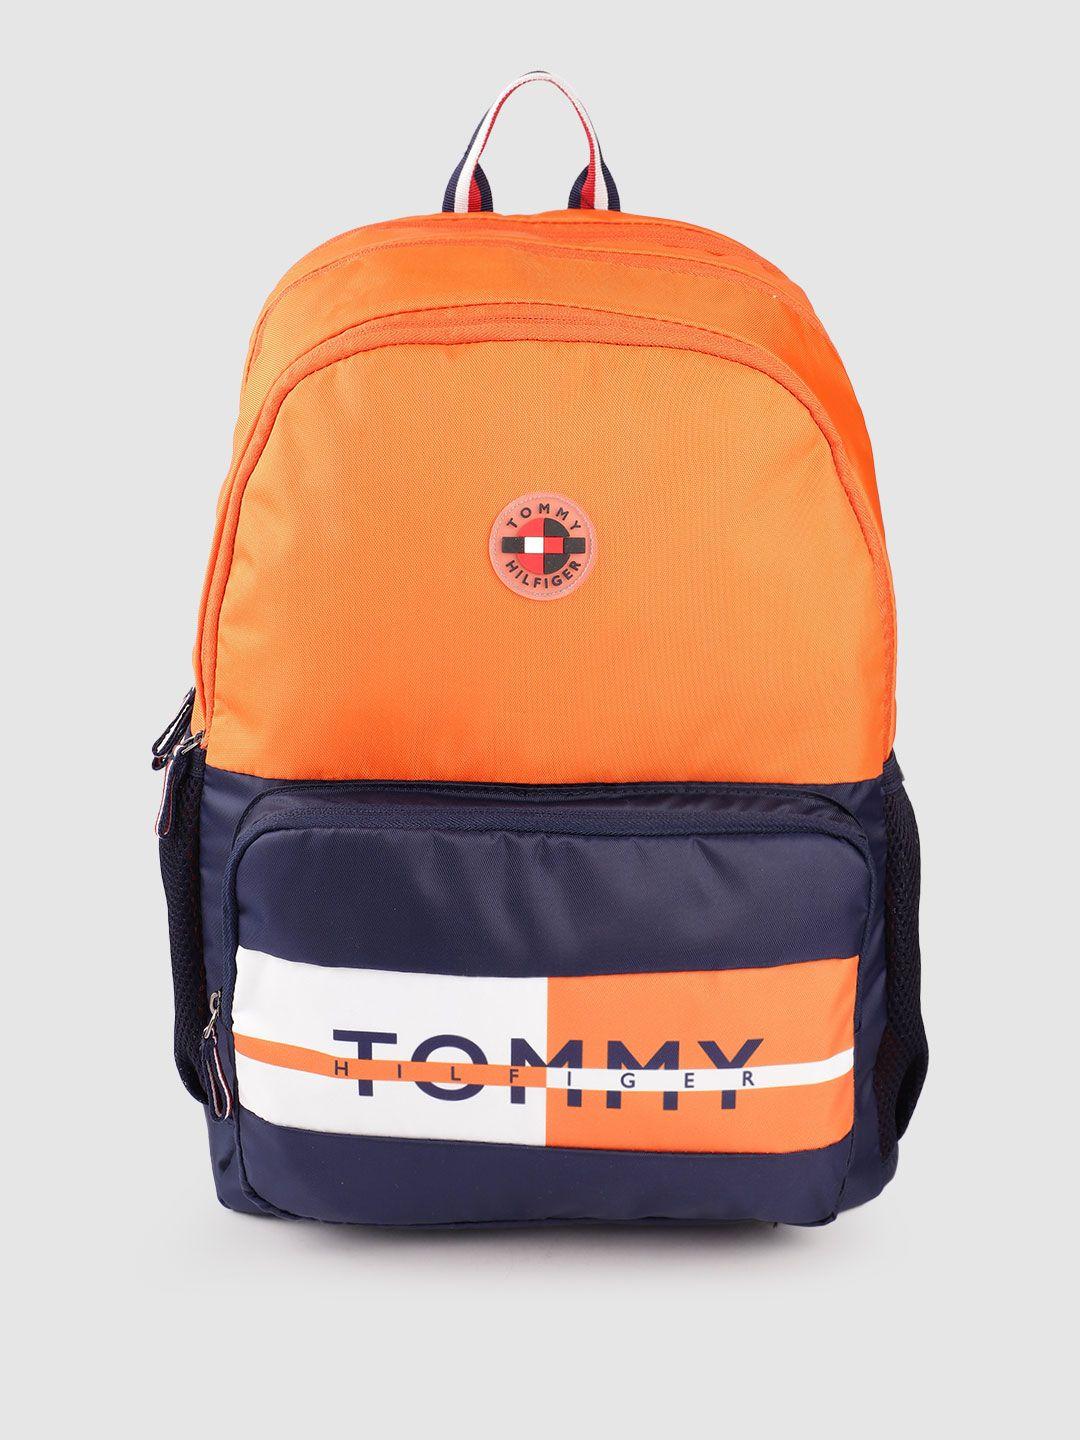 tommy hilfiger unisex orange & navy blue colourblocked applique backpack